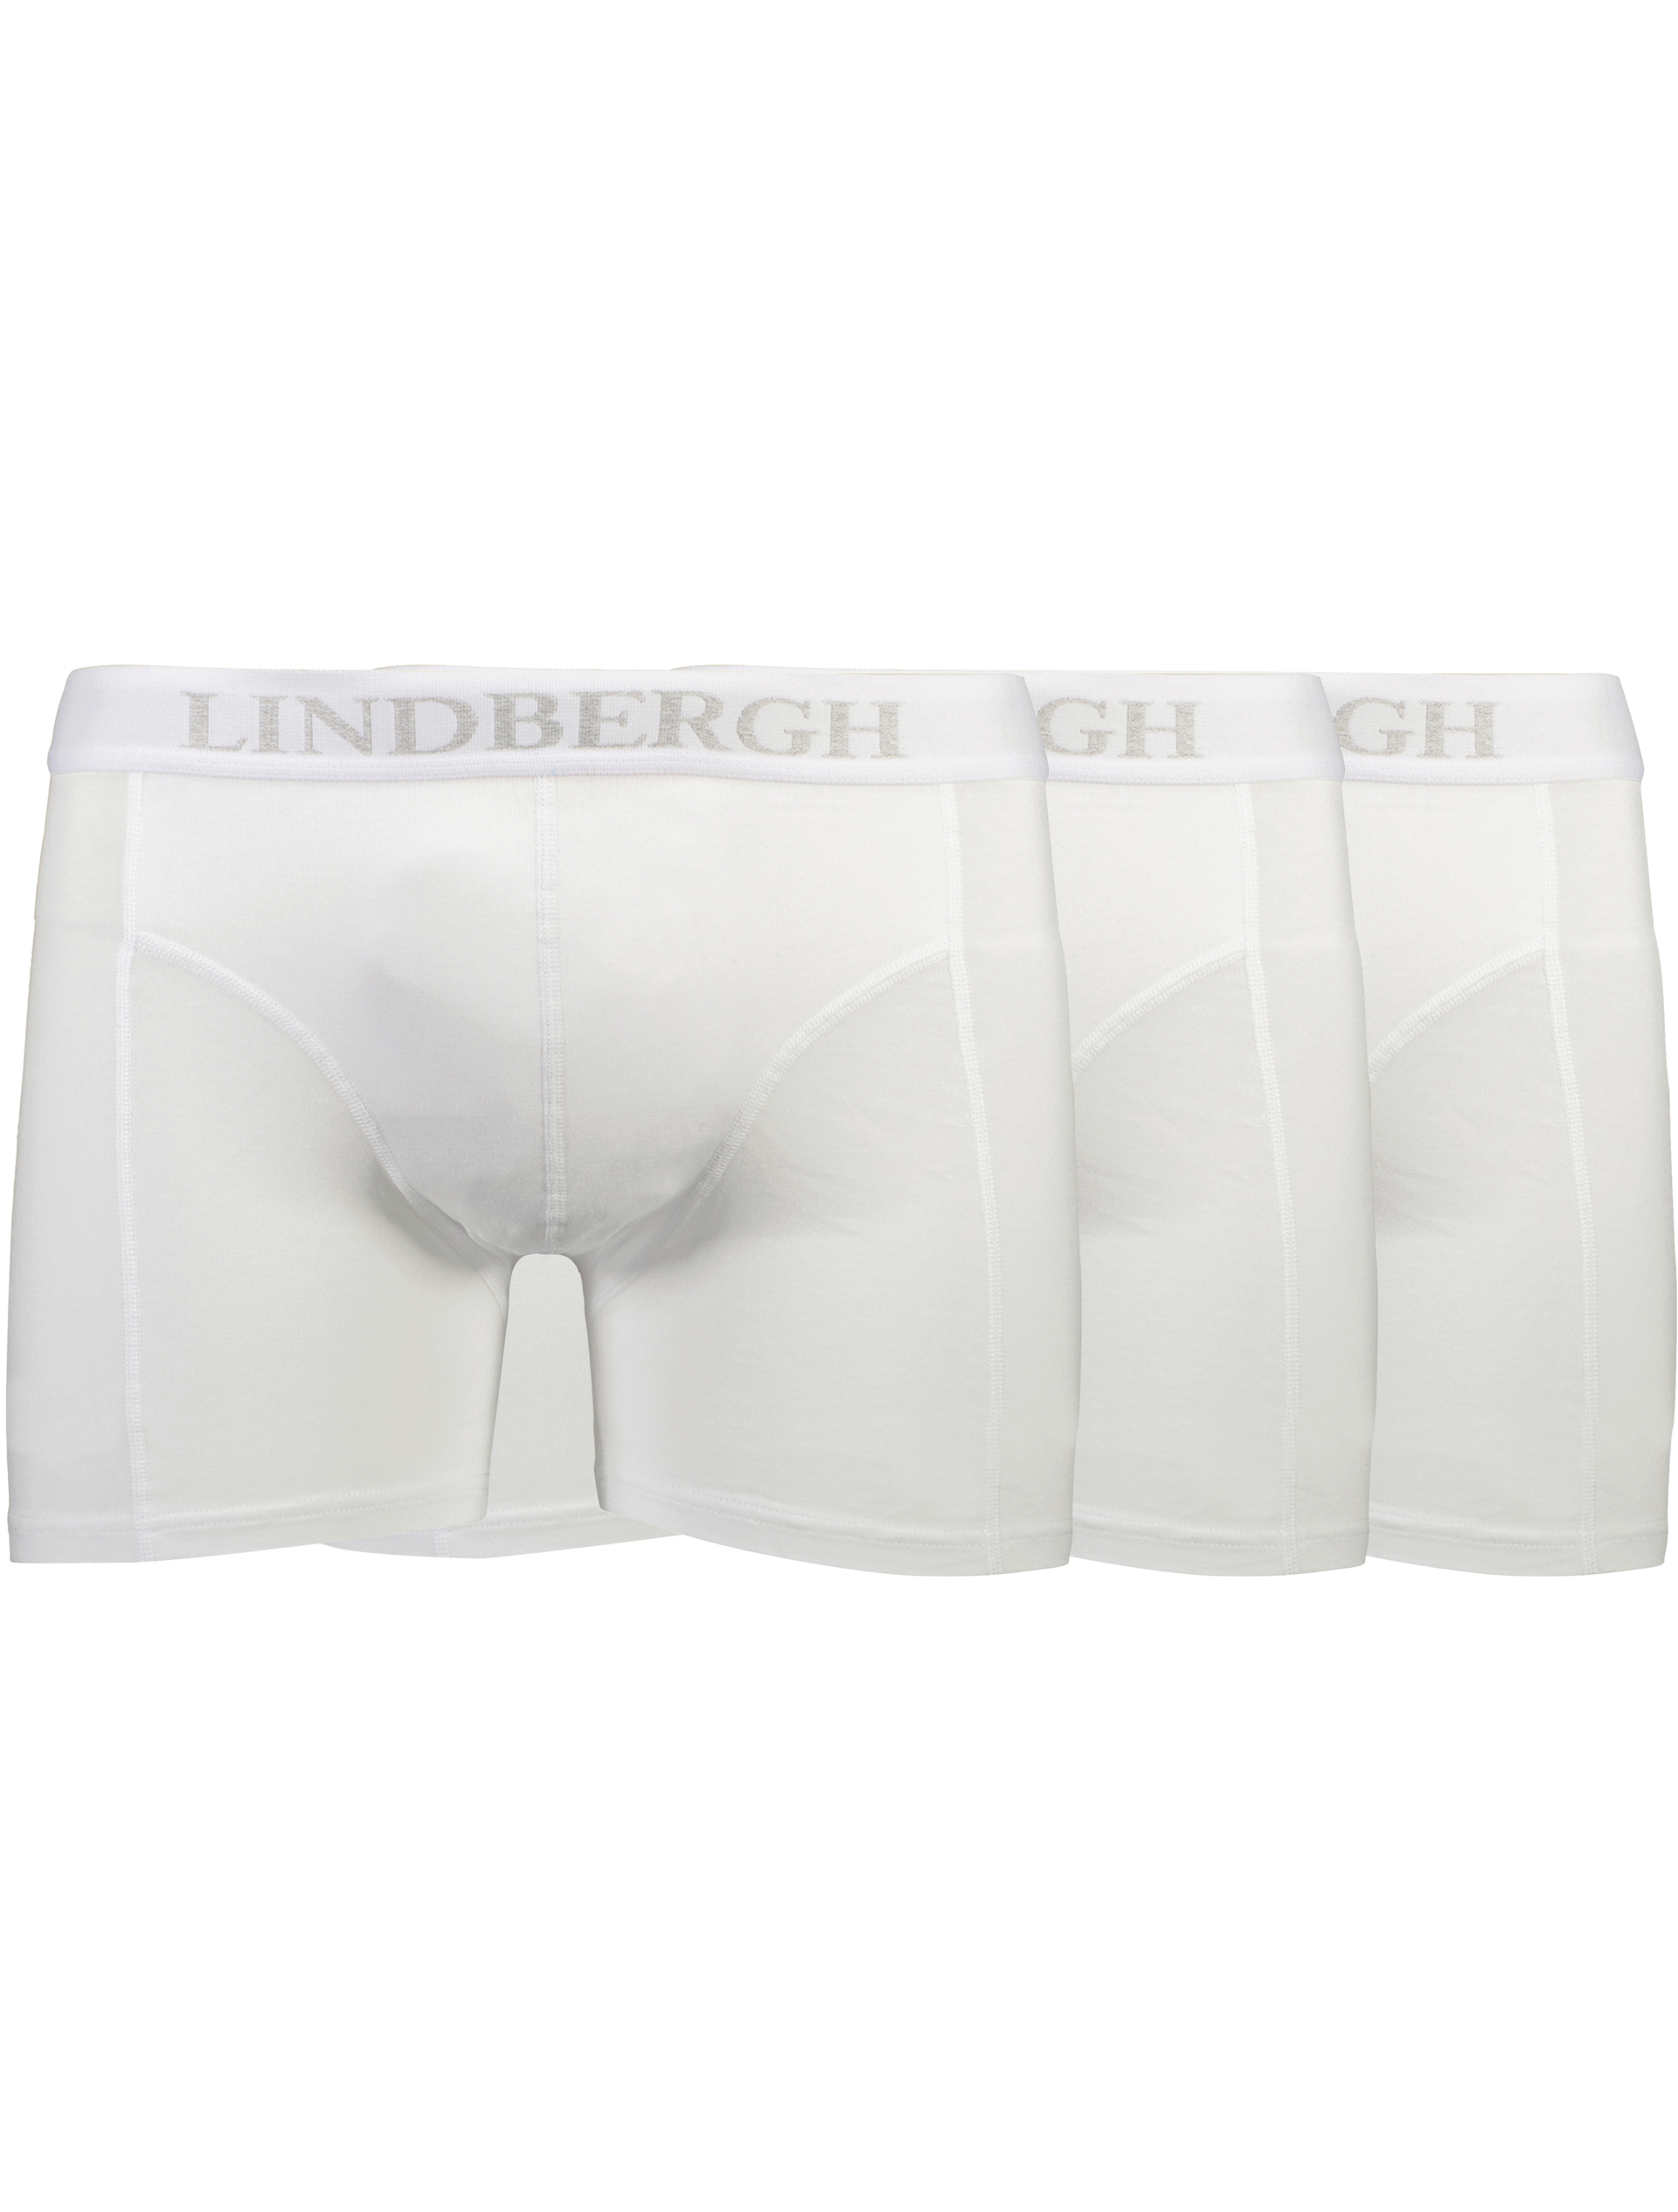 Lindbergh Unterhose weiss / white